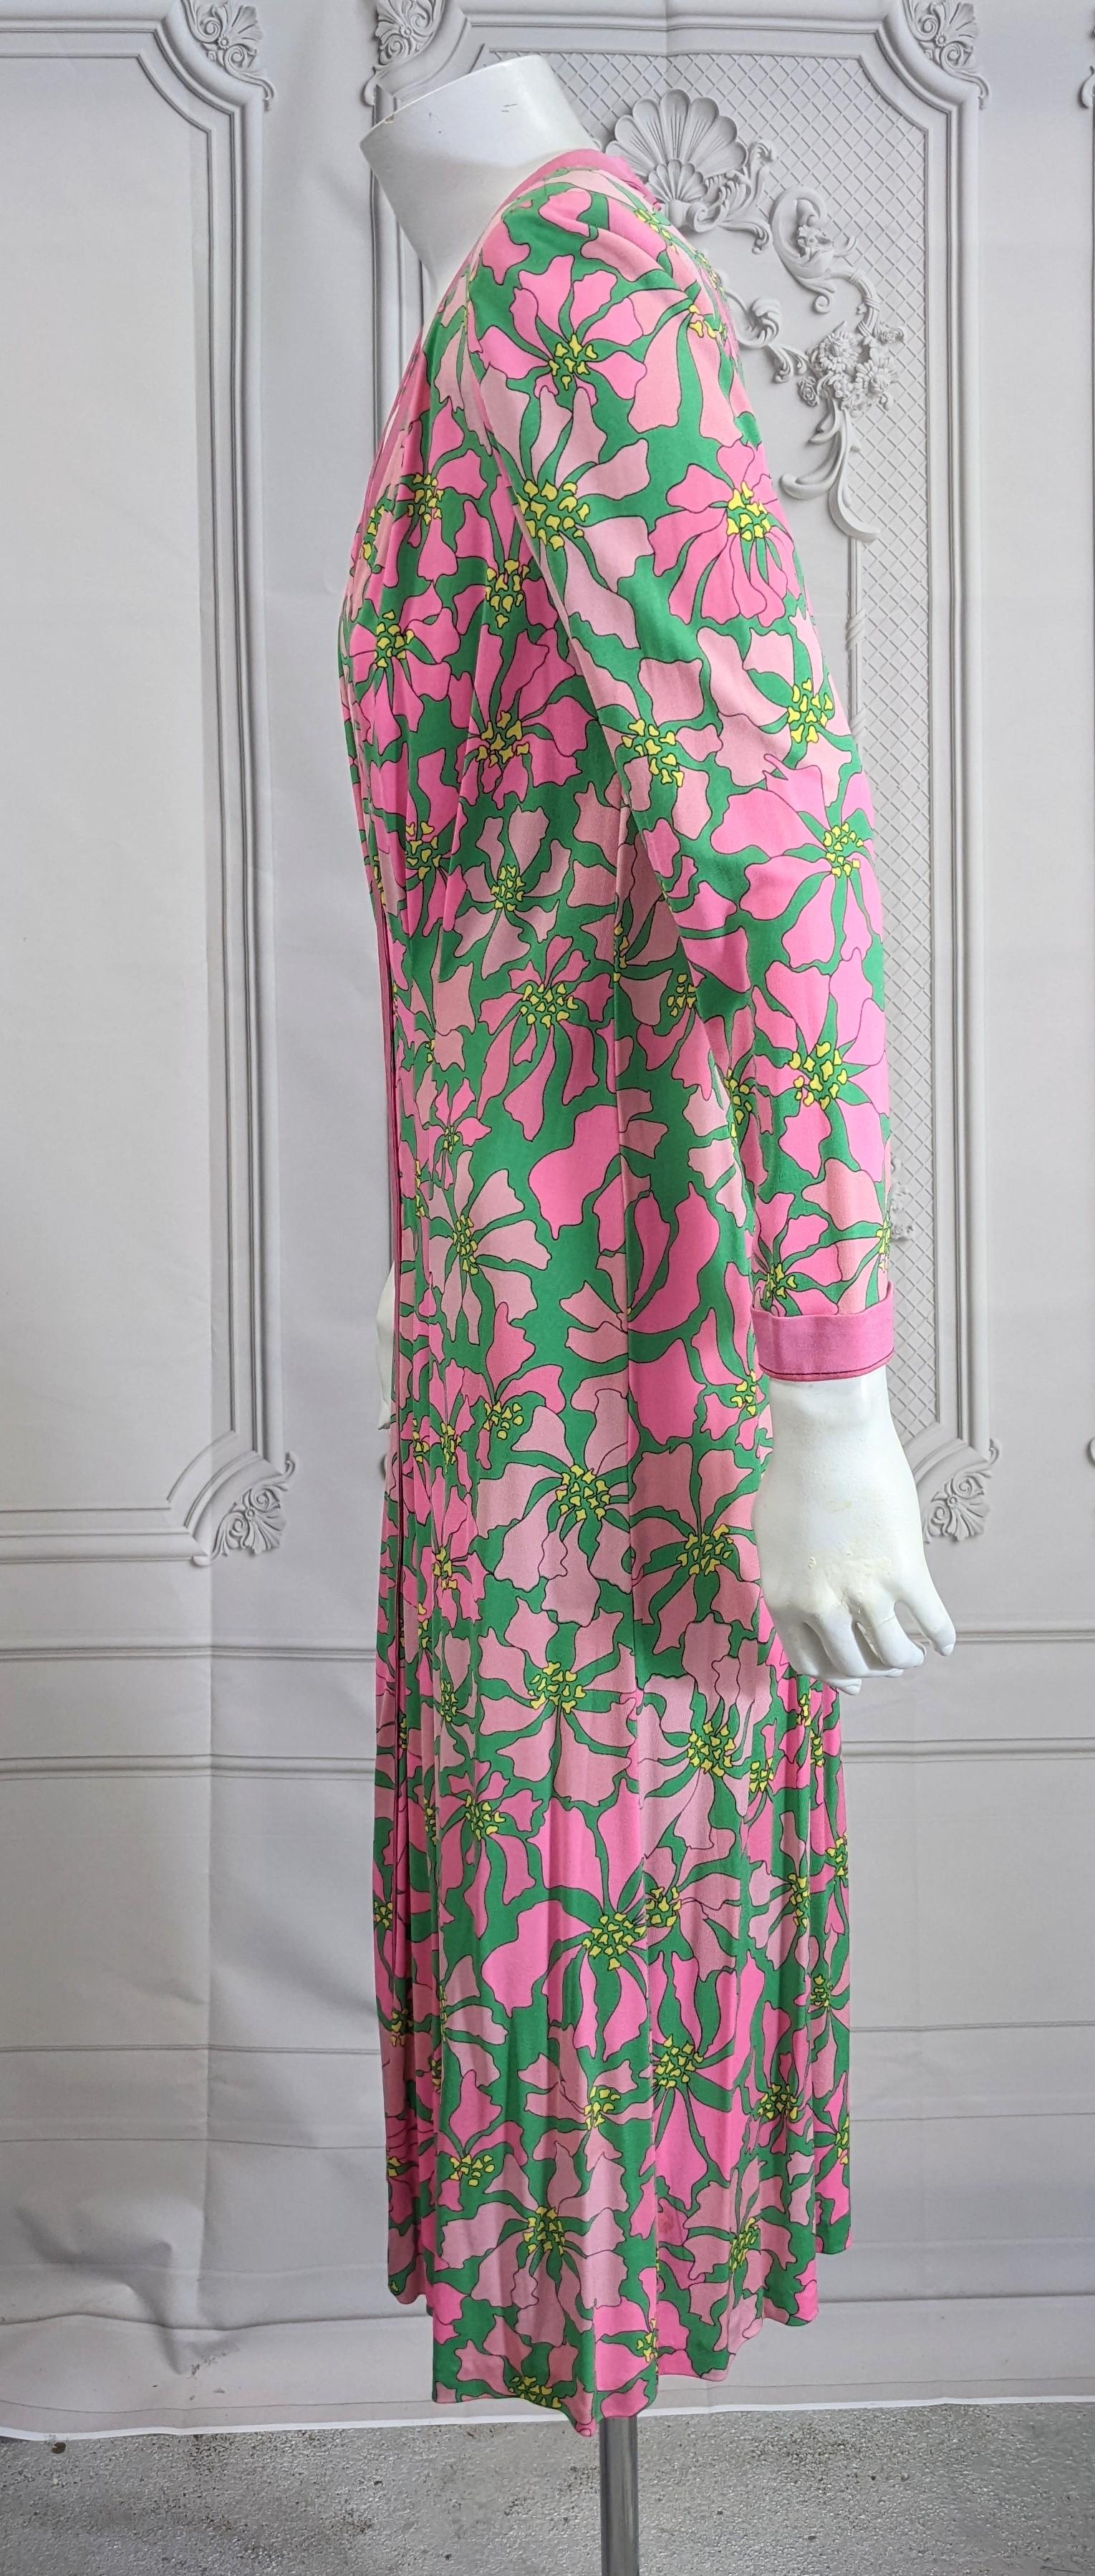 Women's Bessi Silk Jersey Poinsettia Print Dress For Sale